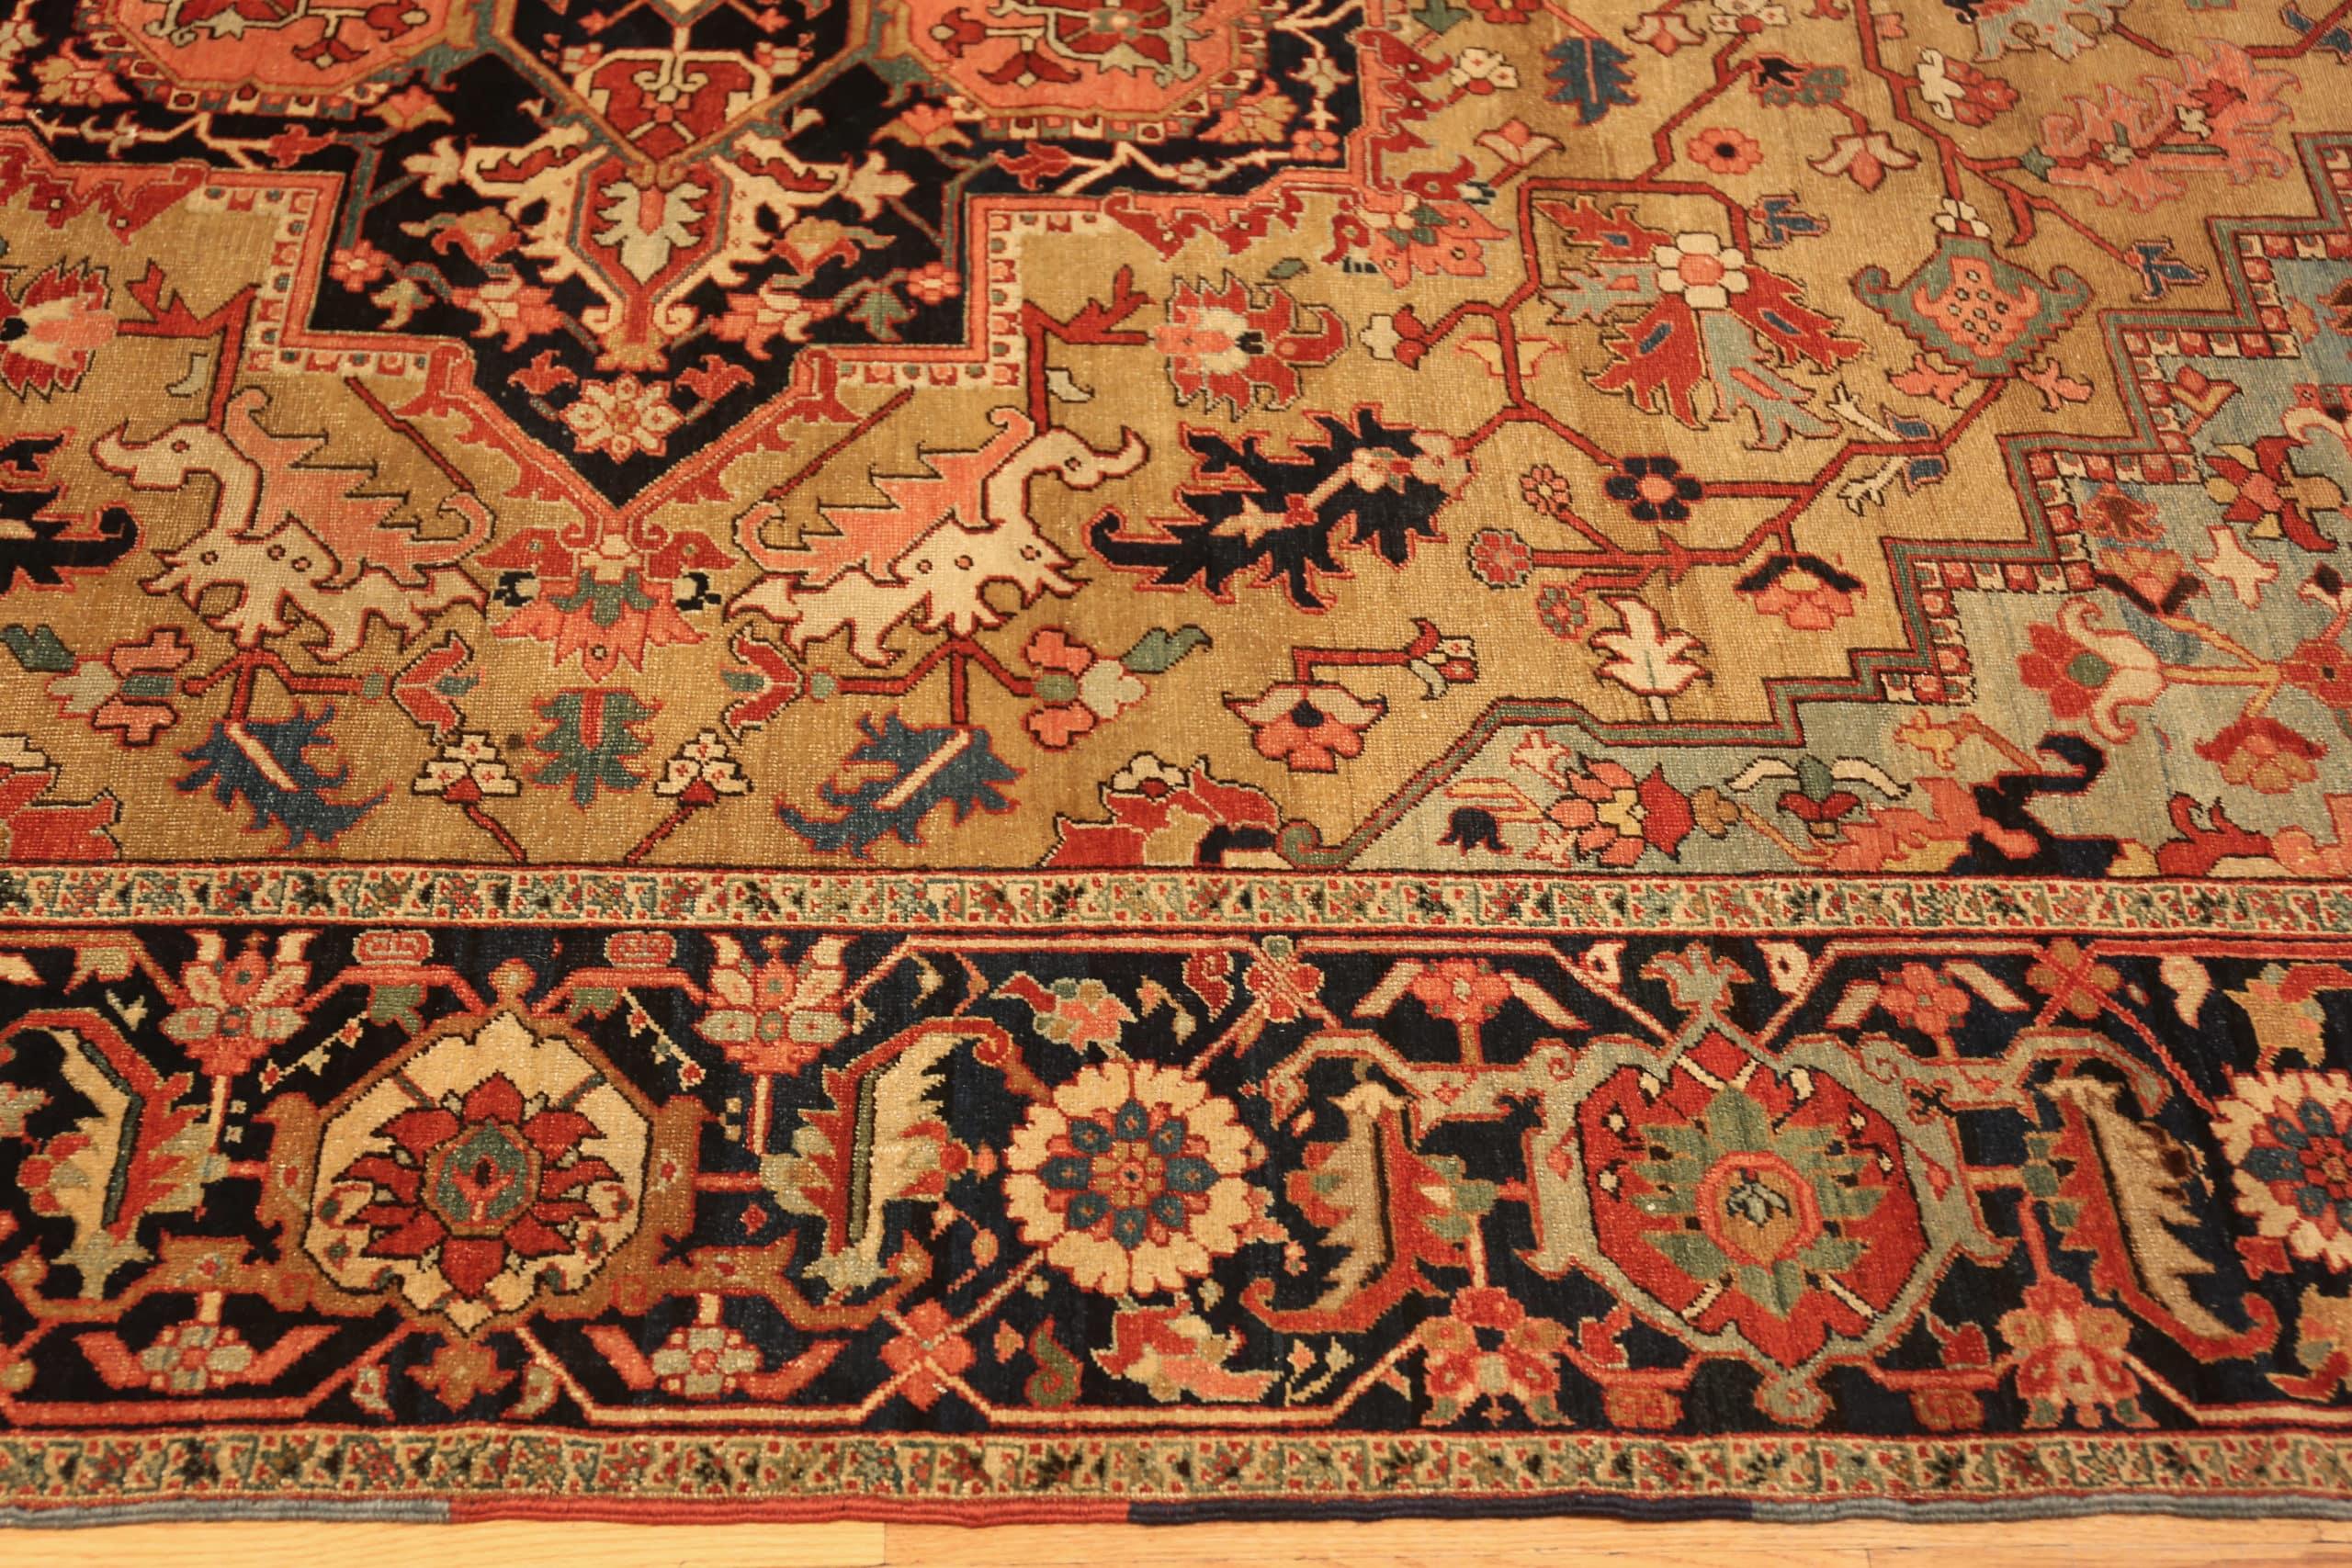 Antique Persian Serapi Area Rug, Country of origin: Persia, Circa date: 1900. Size: 9 ft 4 in x 12 ft 1 in (2.84m x 3.68 m)

